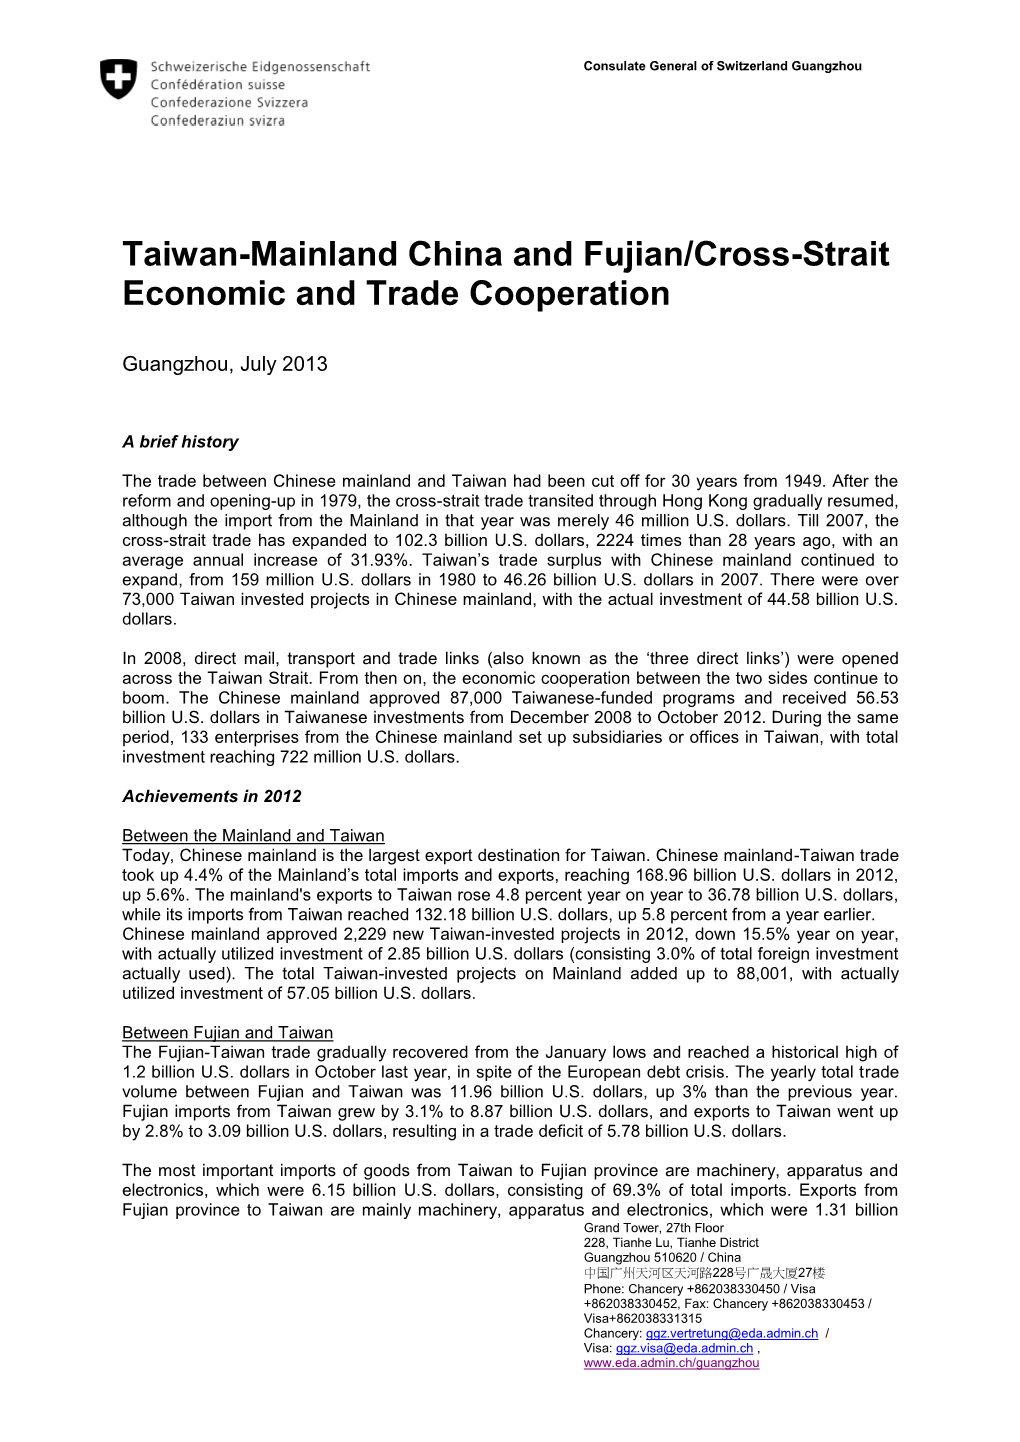 Taiwan-Mainland China and Fujian/Cross-Strait Economic and Trade Cooperation